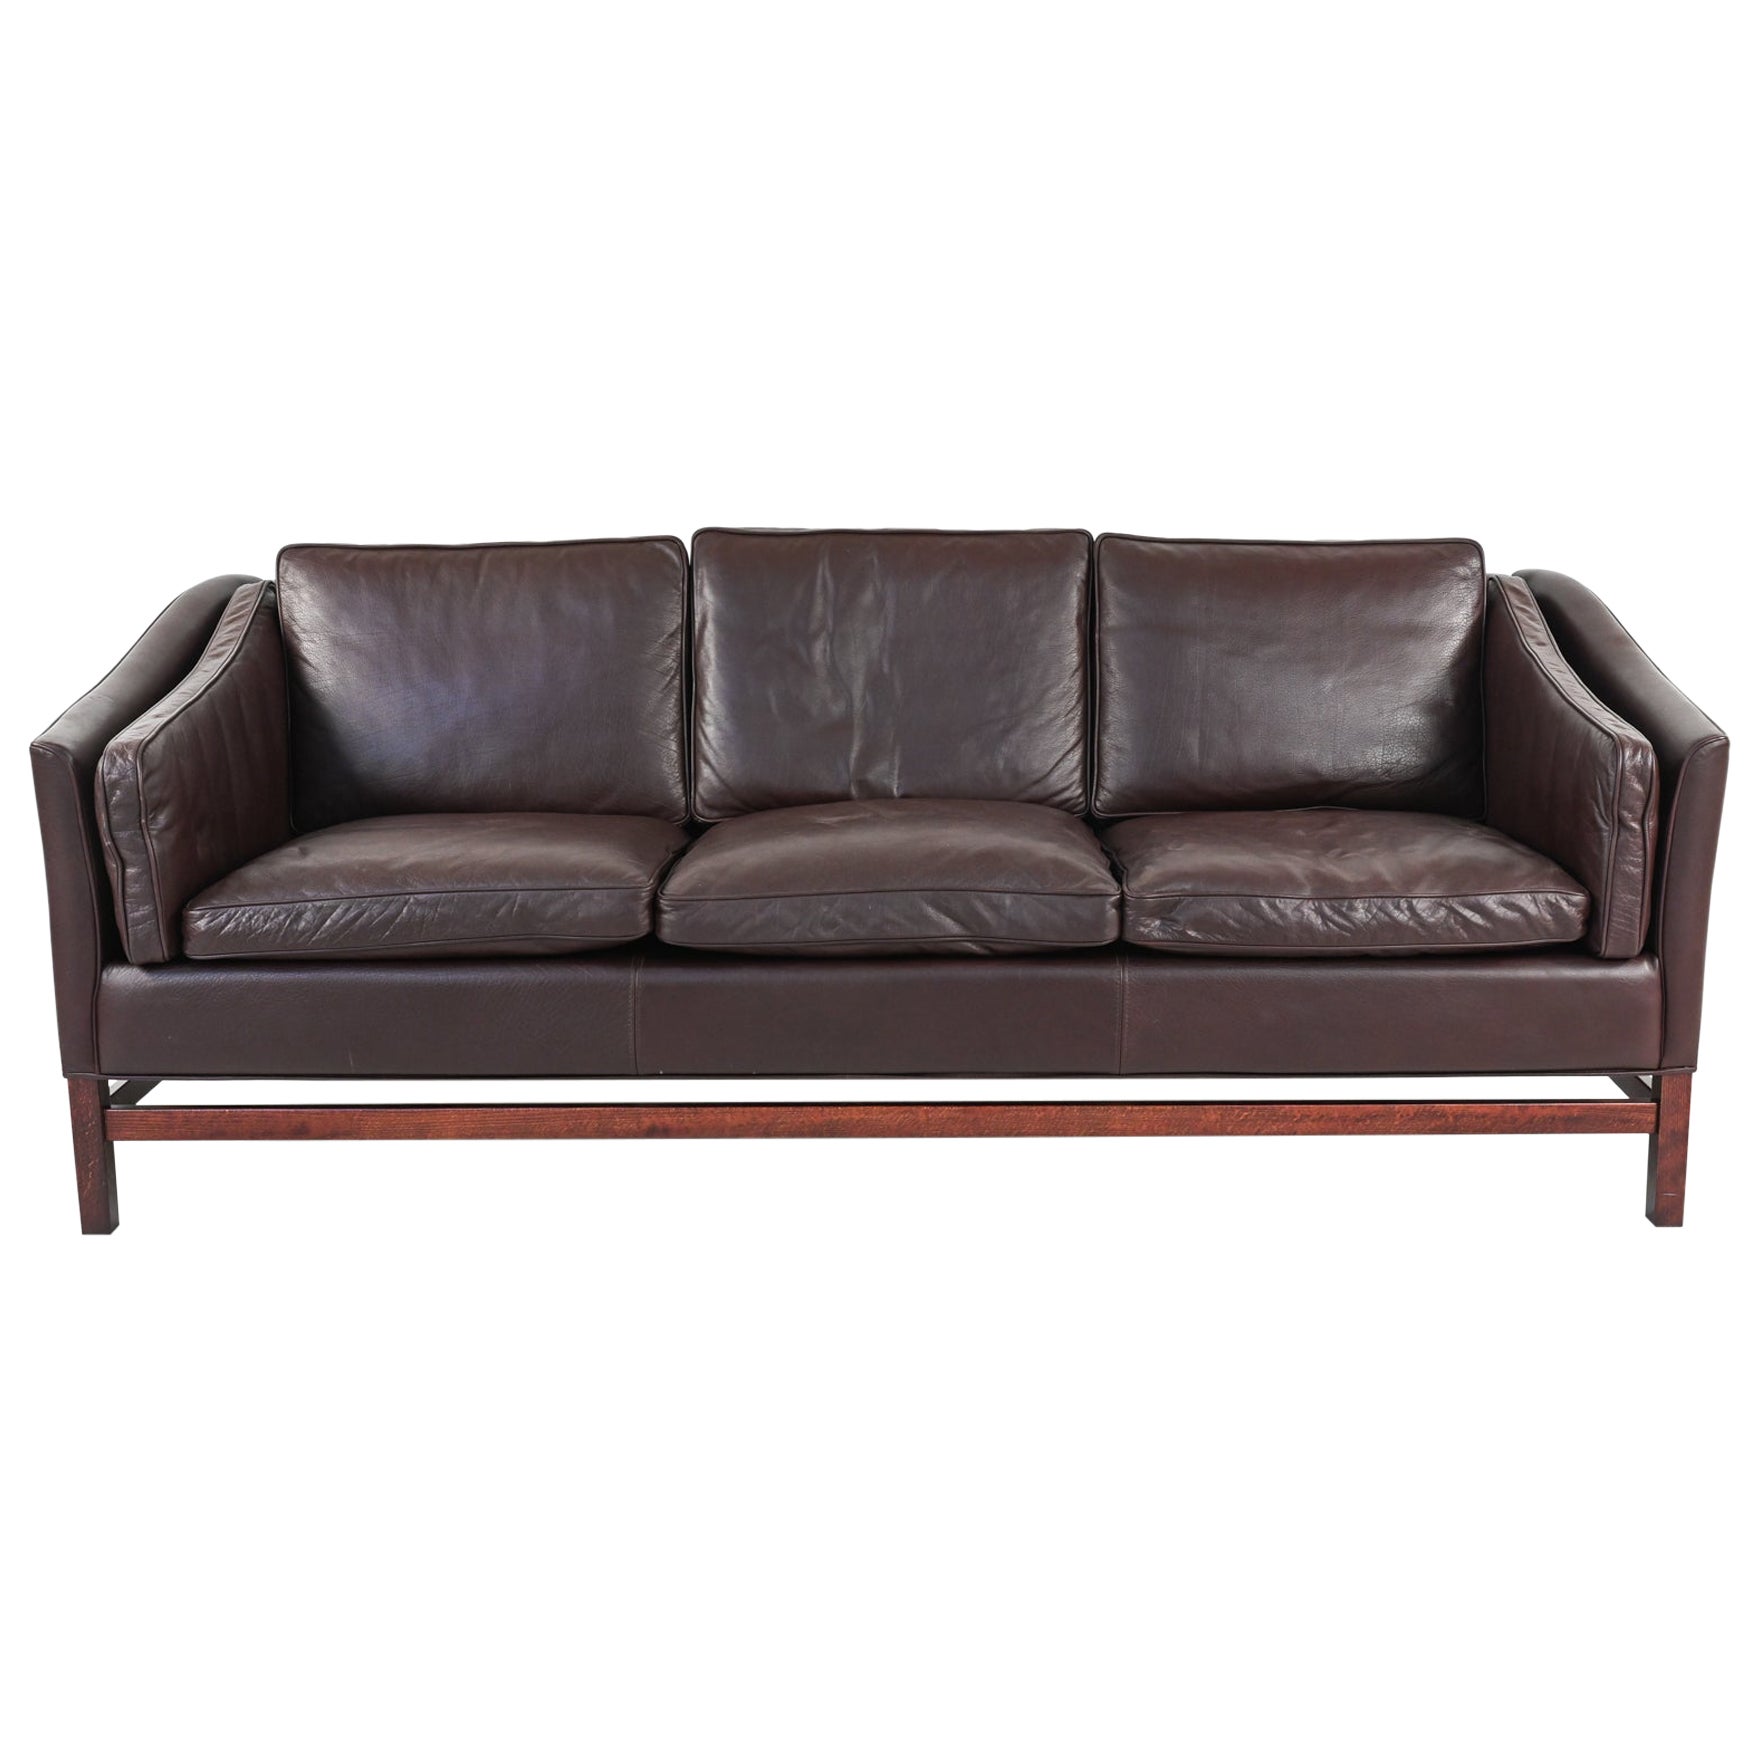 Stouby Danish Modern Leather Sofa